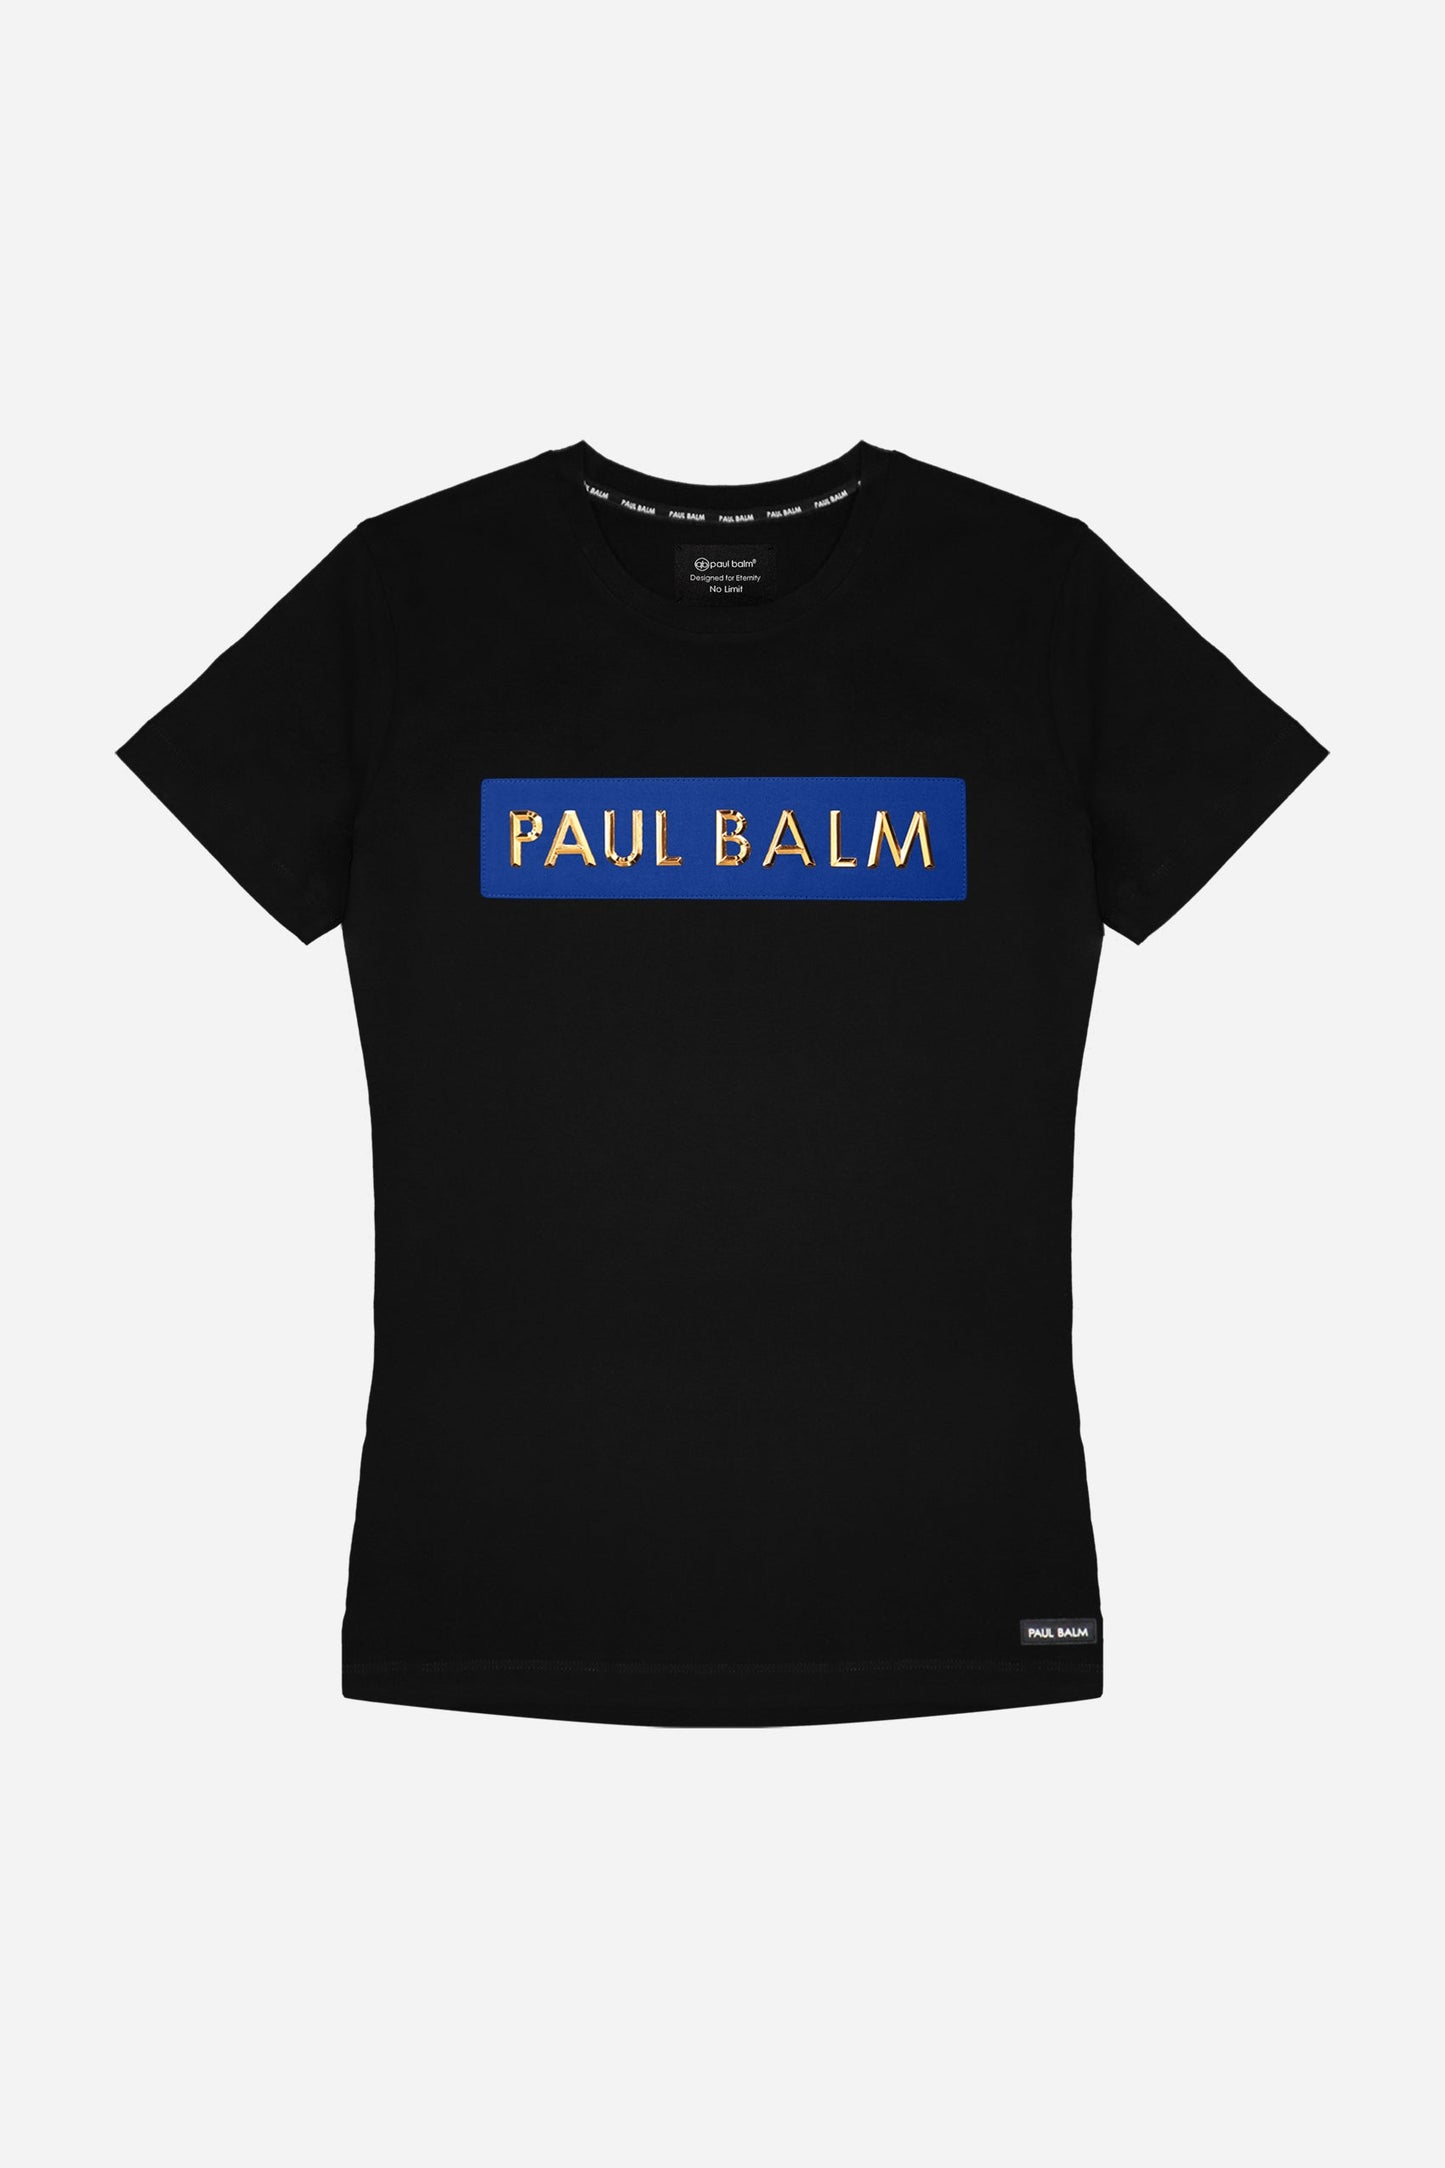 Tshirt PAUL BALM Metall Patch Gold/Blau